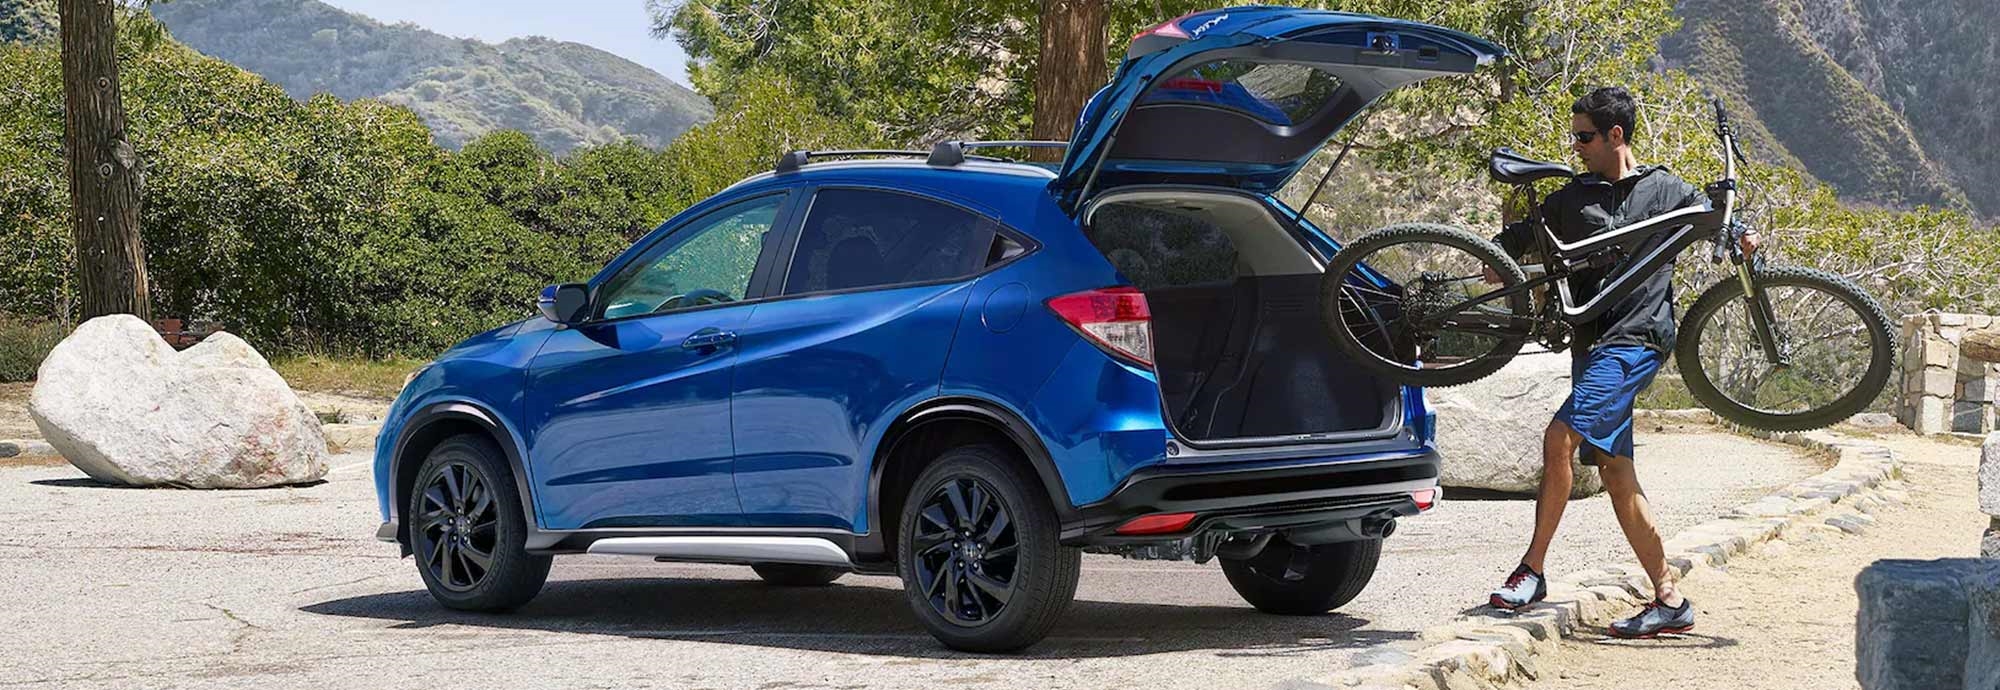 Blue 2021 Honda HR-V with trunk open